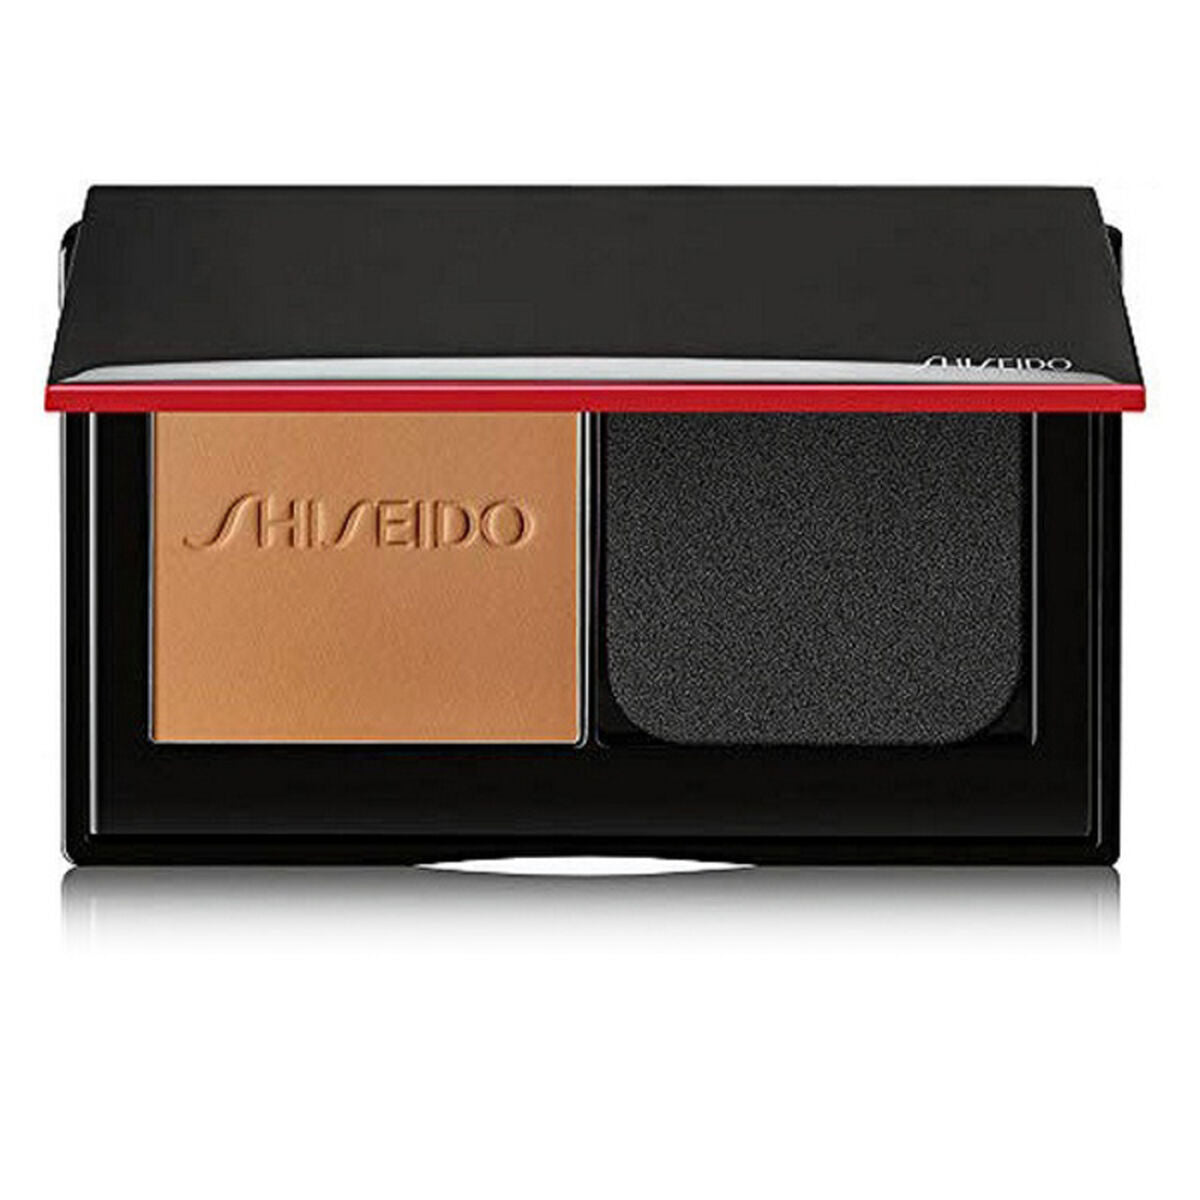 Pulver Make-up Base Synchro Skin Self-refreshing Shiseido